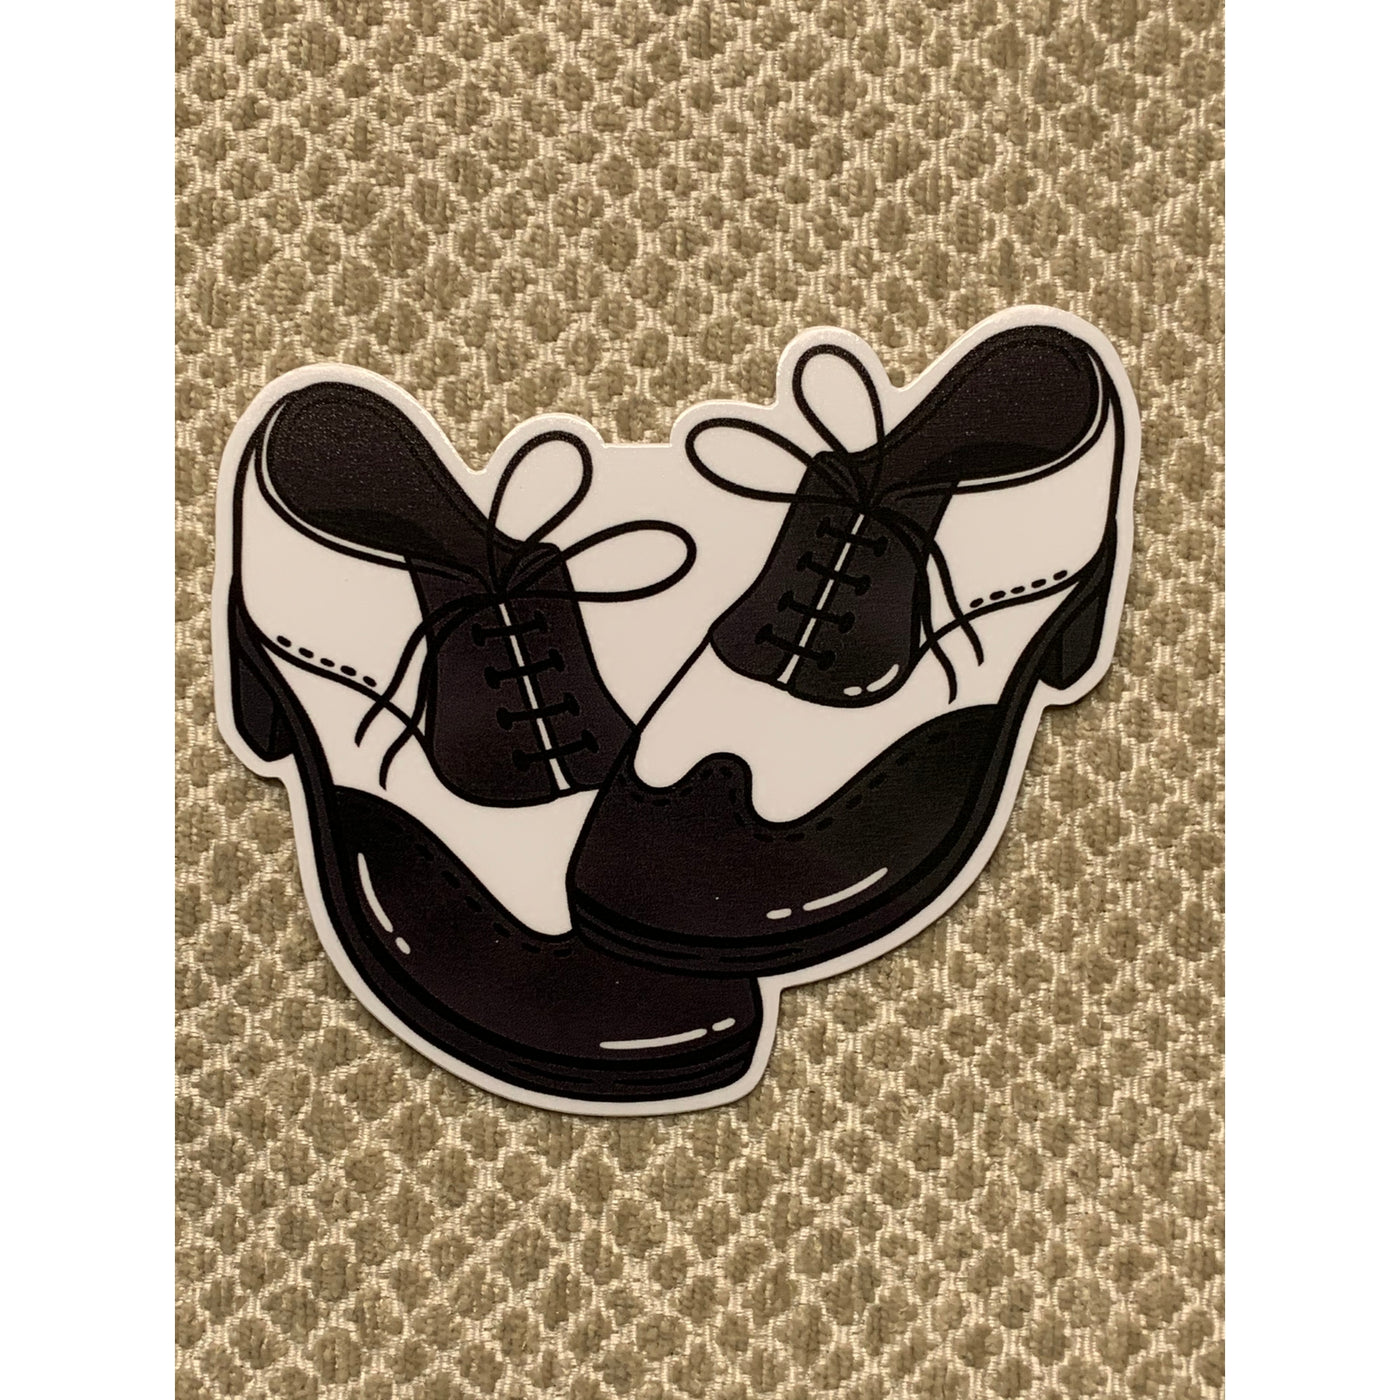 Denali Spectator Tap Shoes Sticker